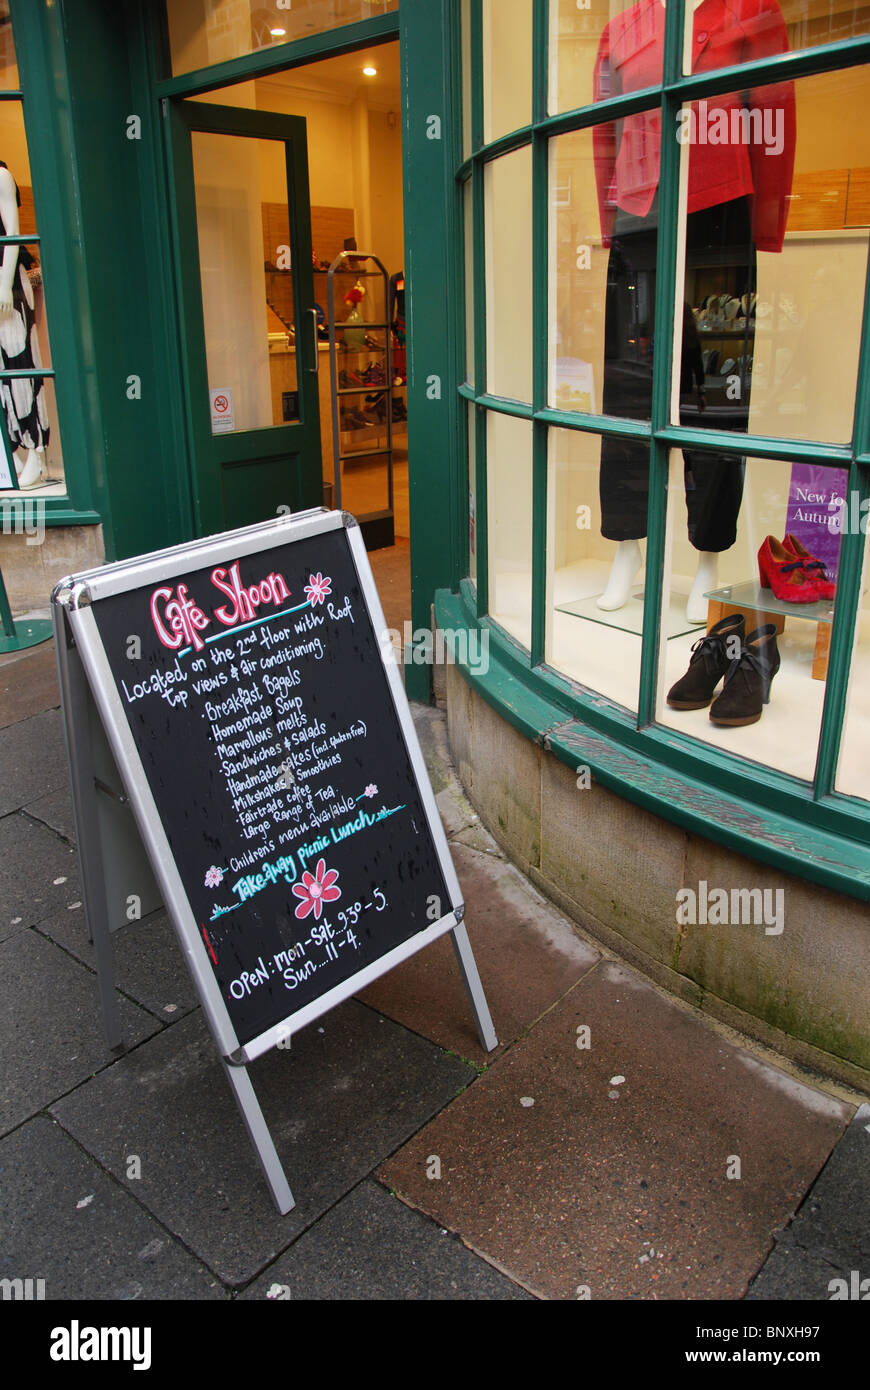 sign advertising Cafe Shoon, Bath Somerset UK Stock Photo